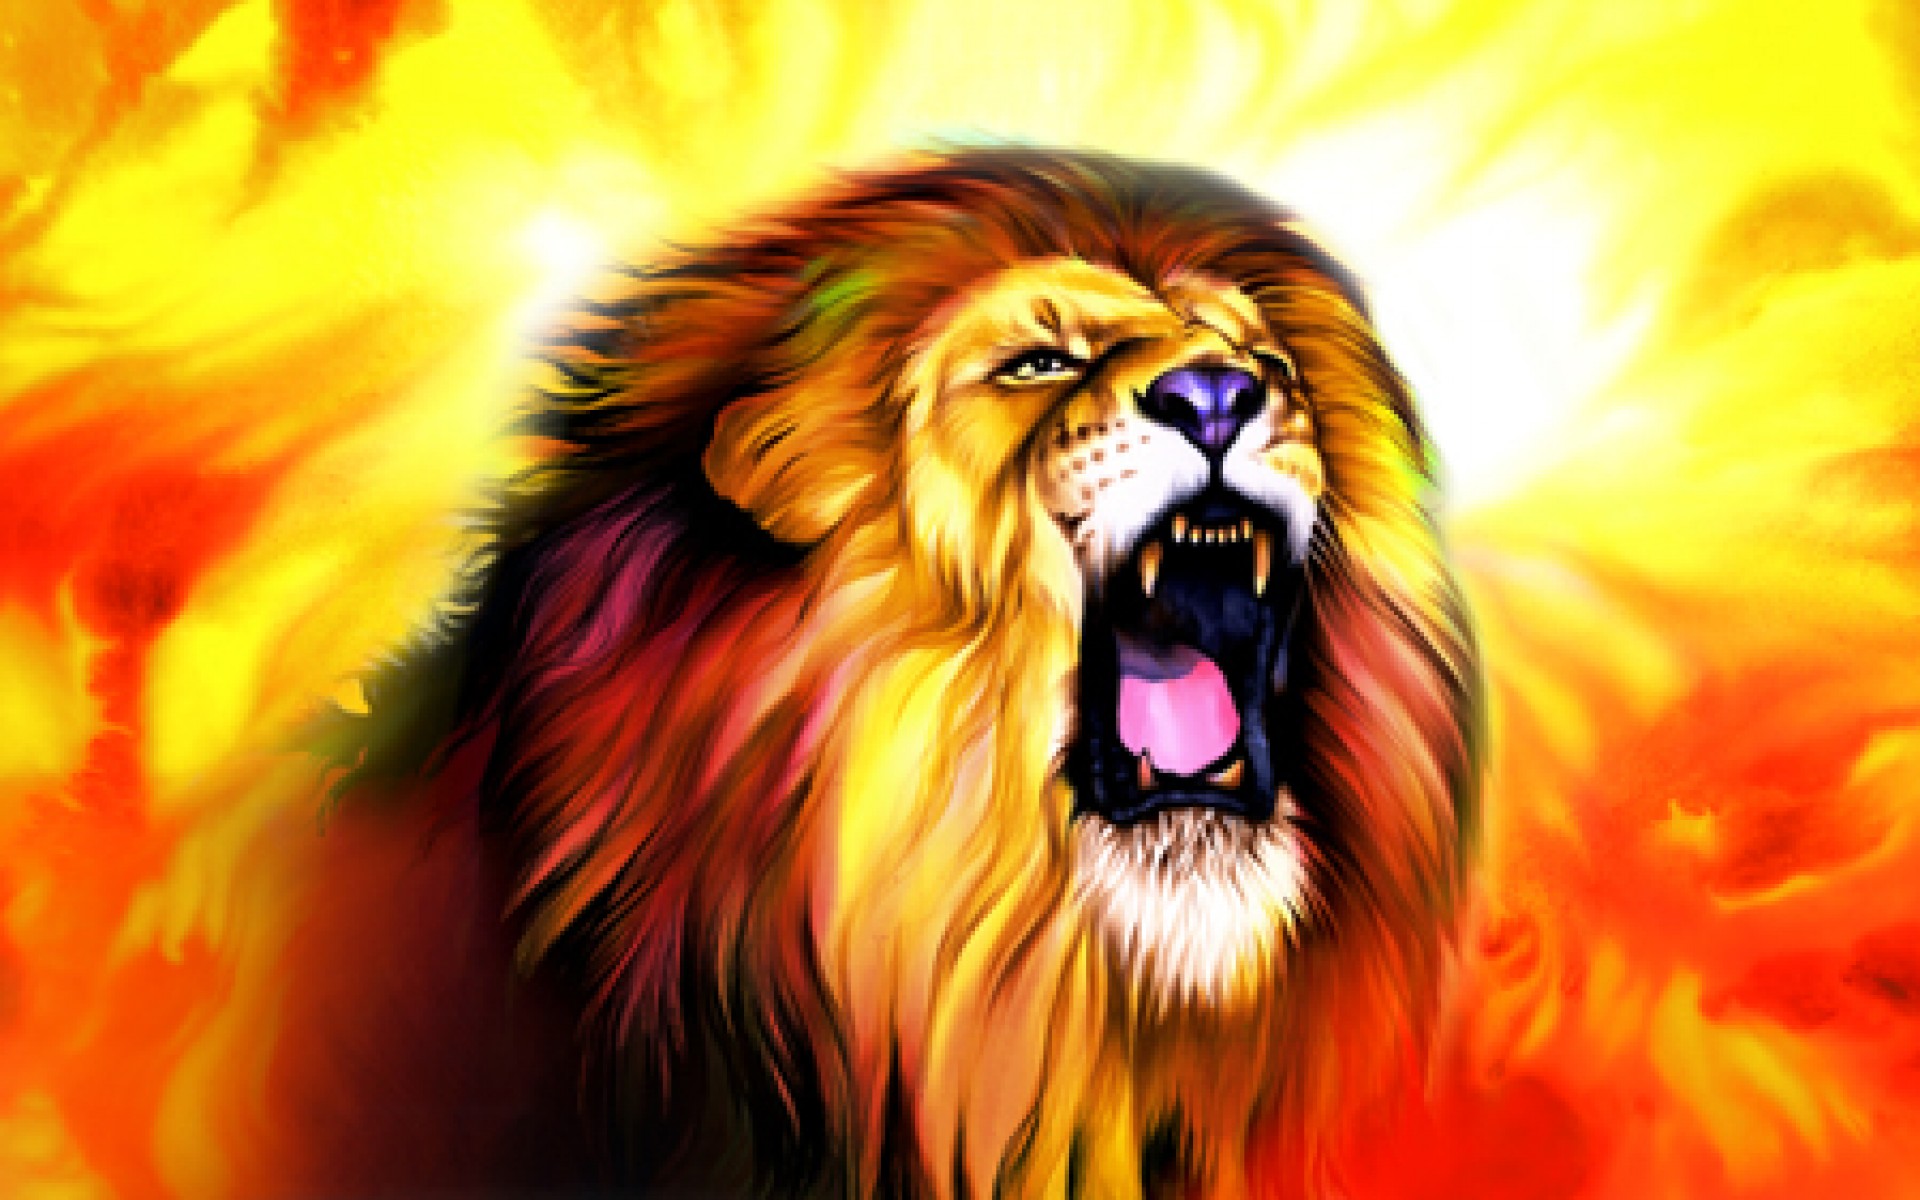 image of roaring lion download